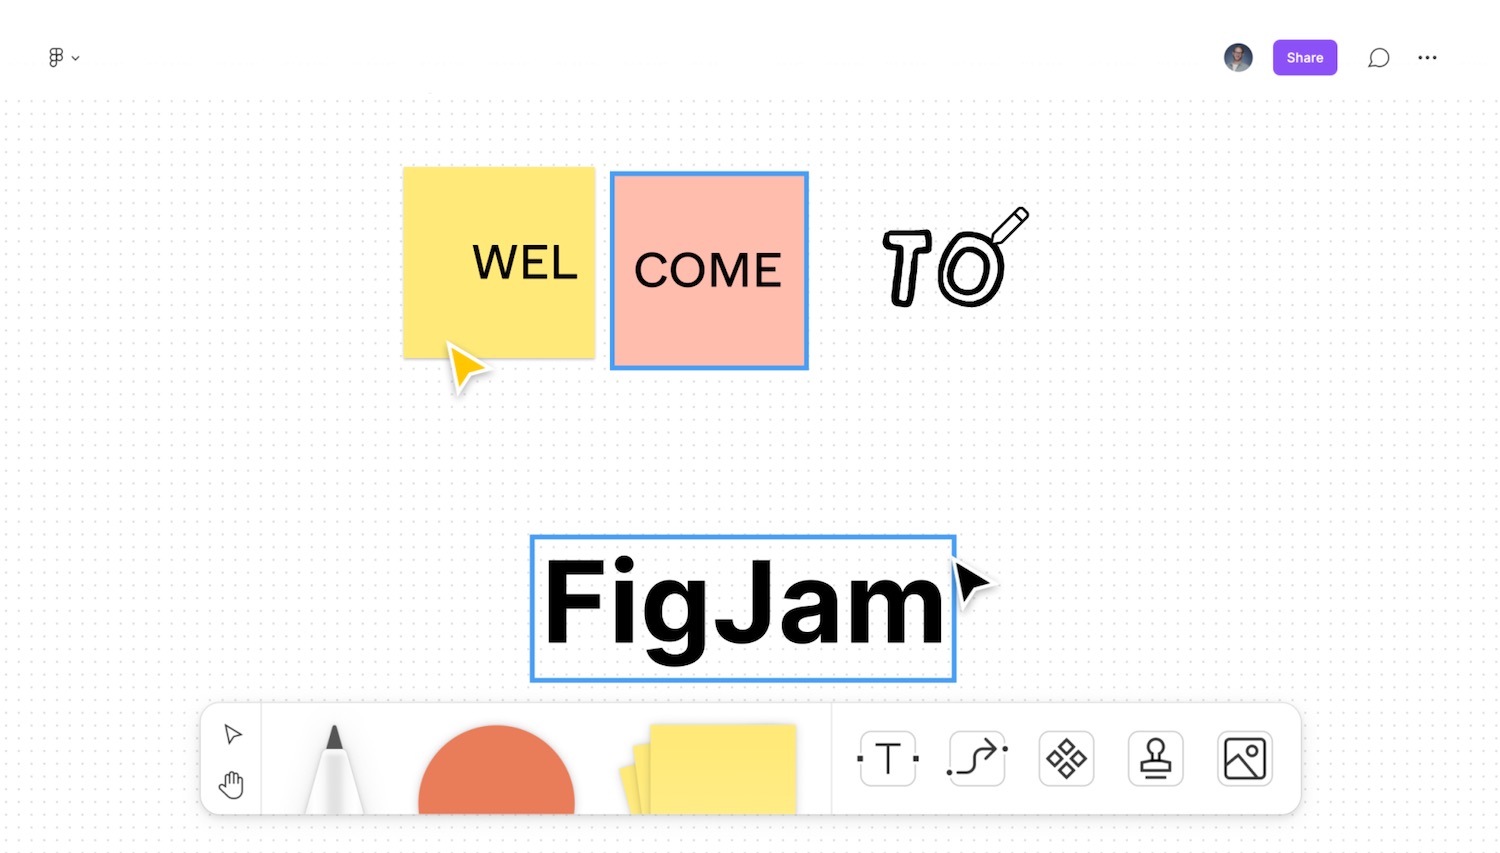 FigJam - Collaborative digital whiteboard by Figma